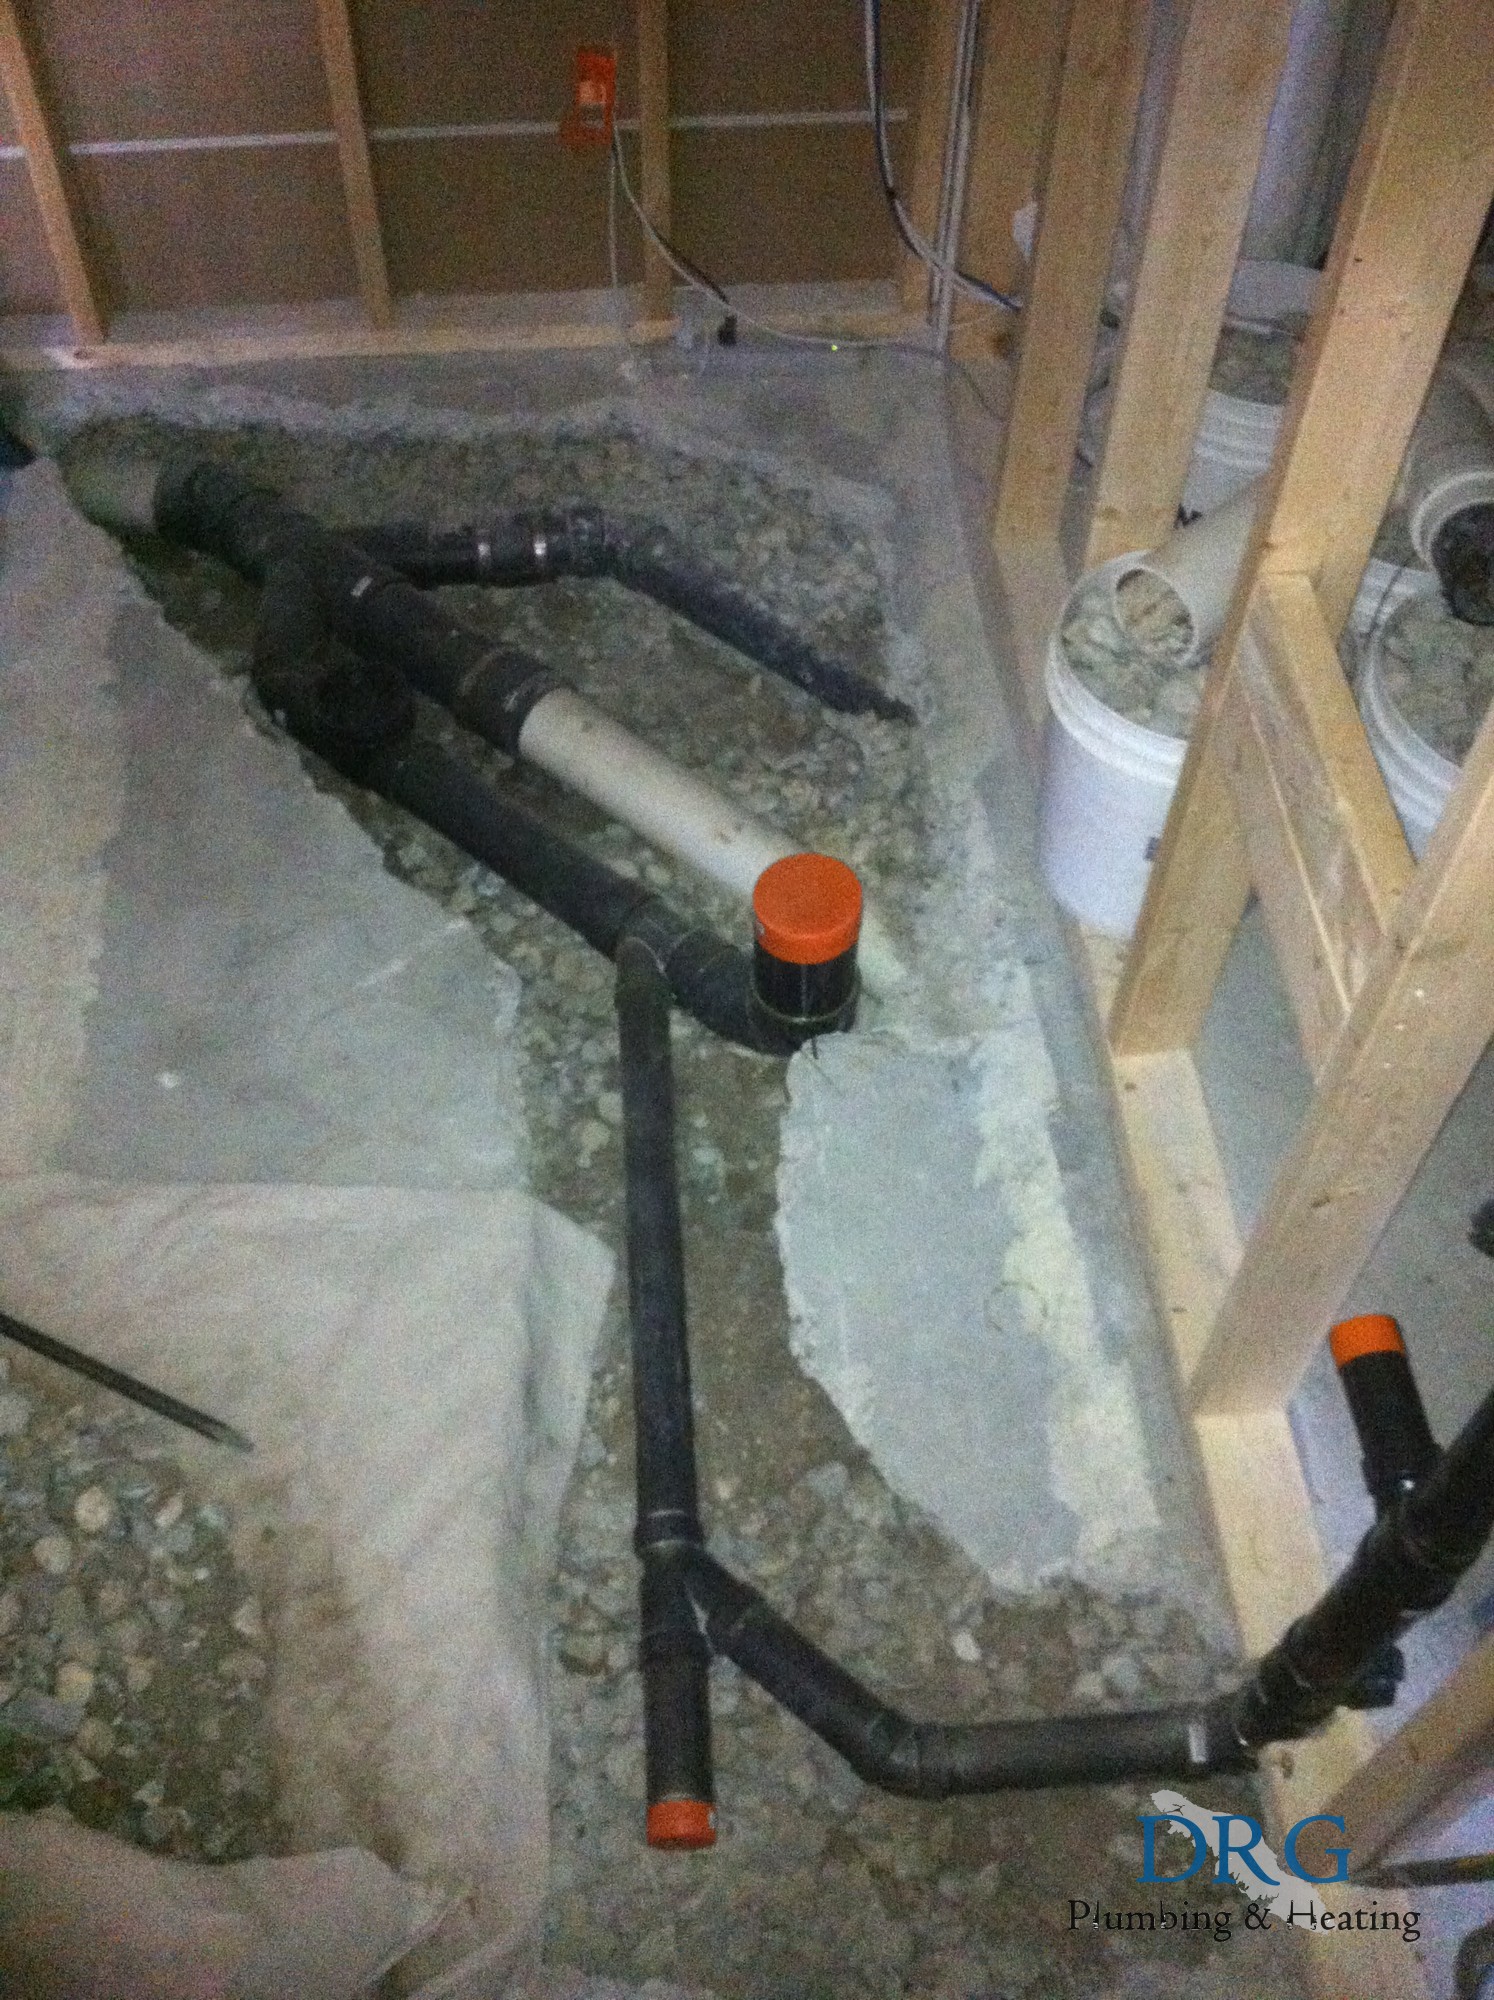 Basement Bathroom Rough In Drg Plumbing Heating Nanaimo And Area